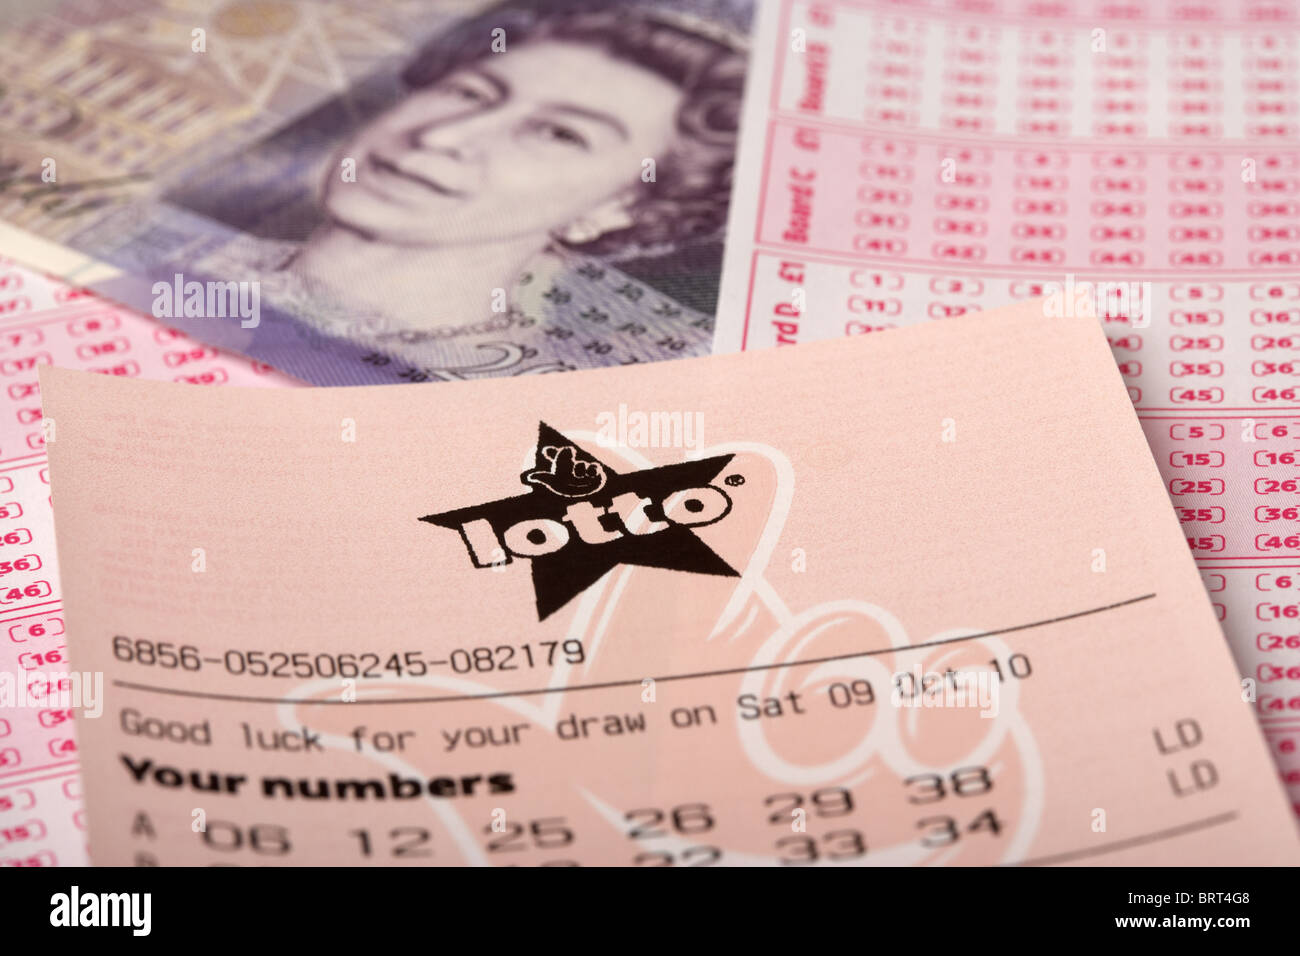 uk british national lottery lotto ticket with picks and twenty pound note Stock Photo